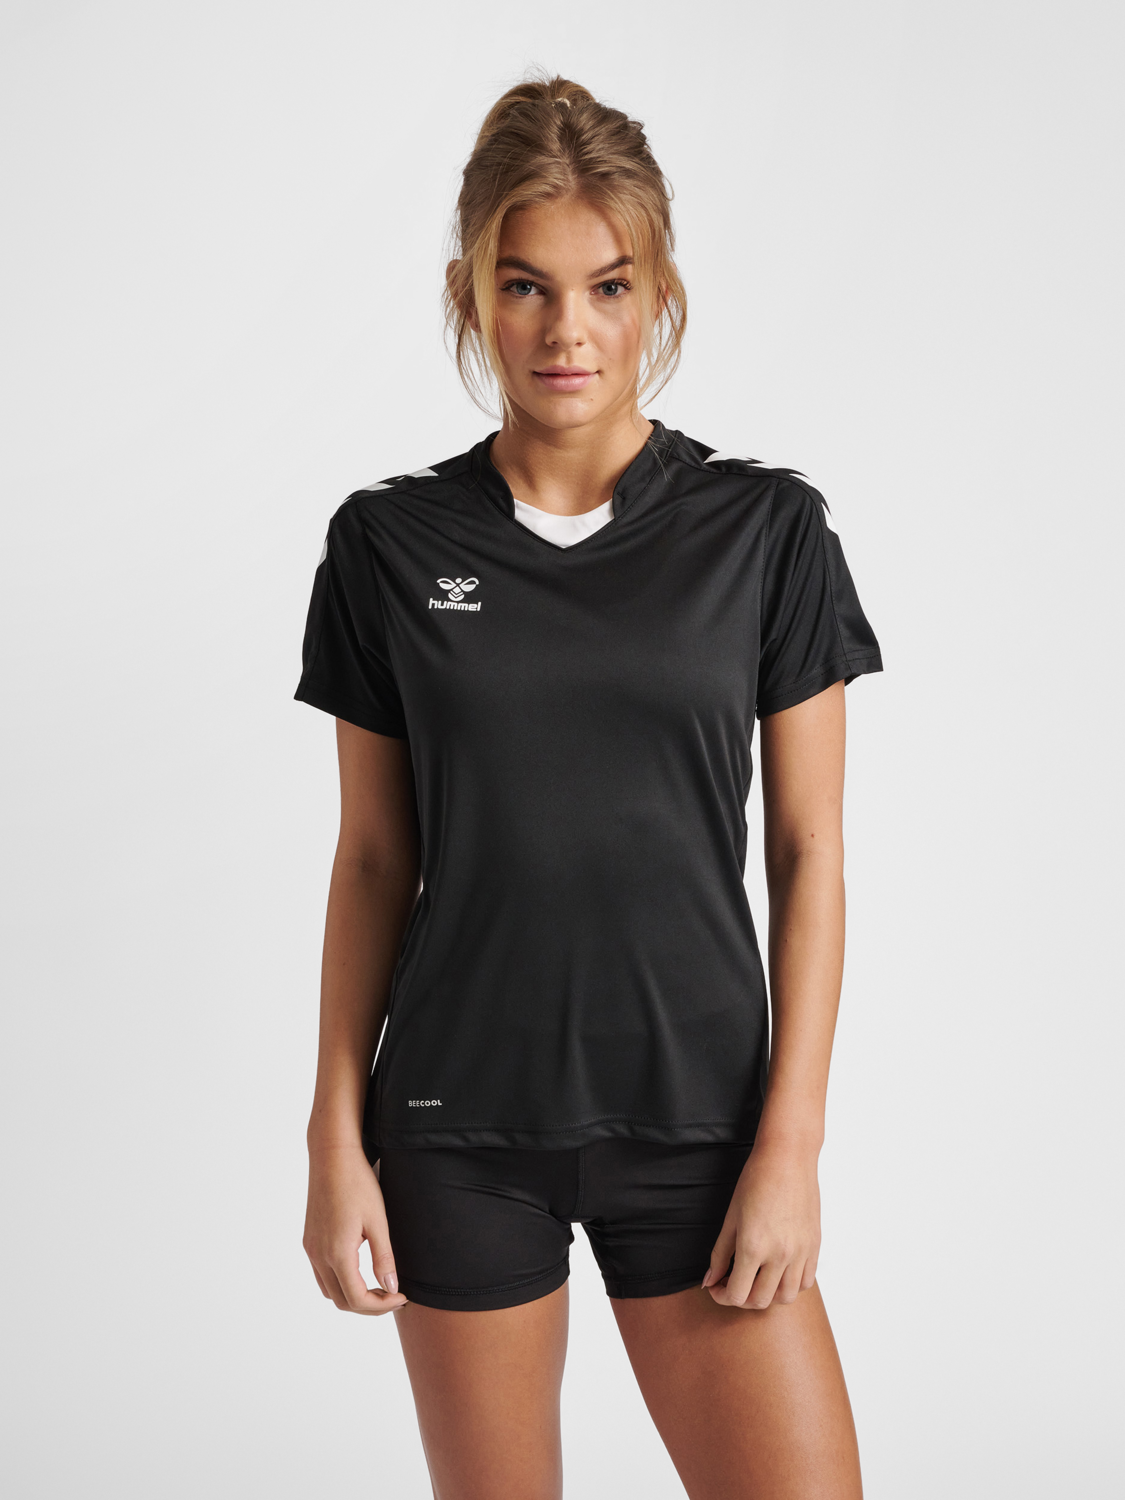 Details about   Hummel Football Soccer Lead Mens Short Sleeve SS Sports Training Jersey Shirt 